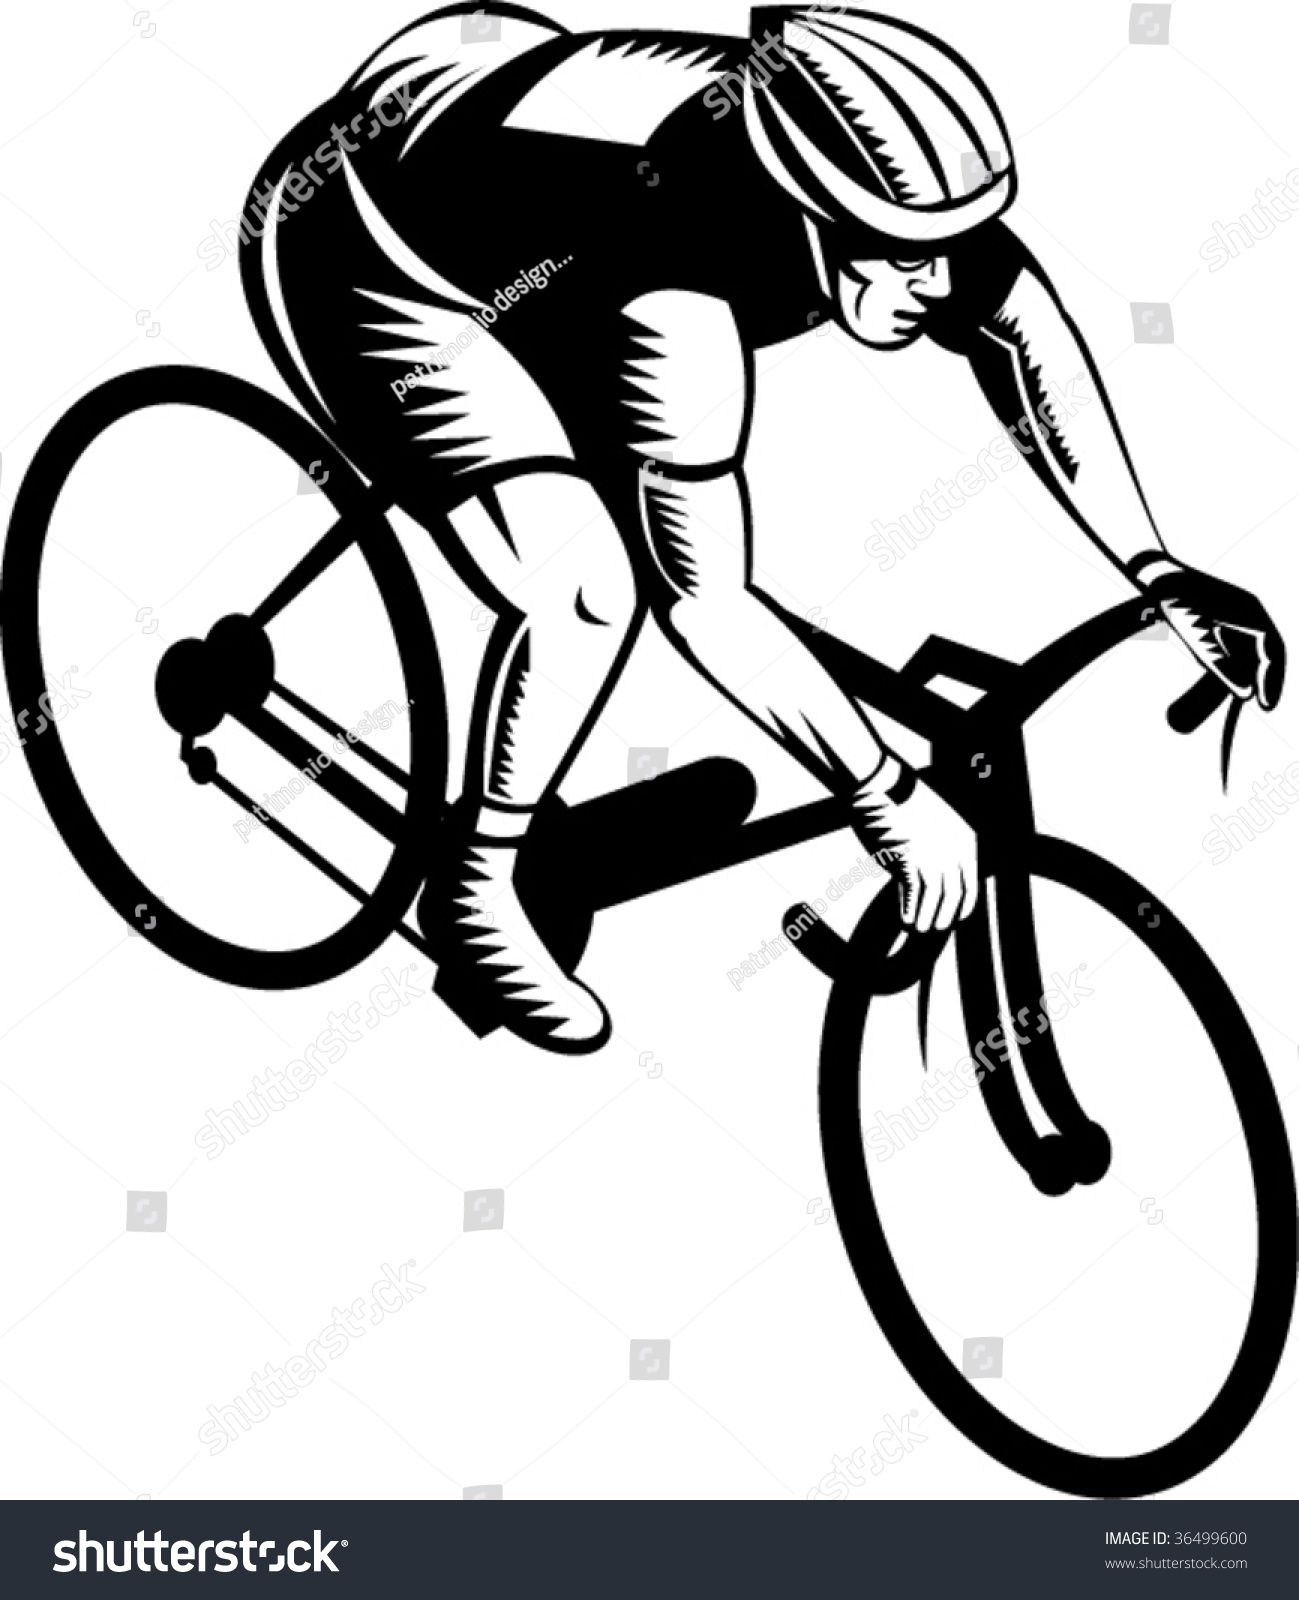 bike race clipart - photo #44